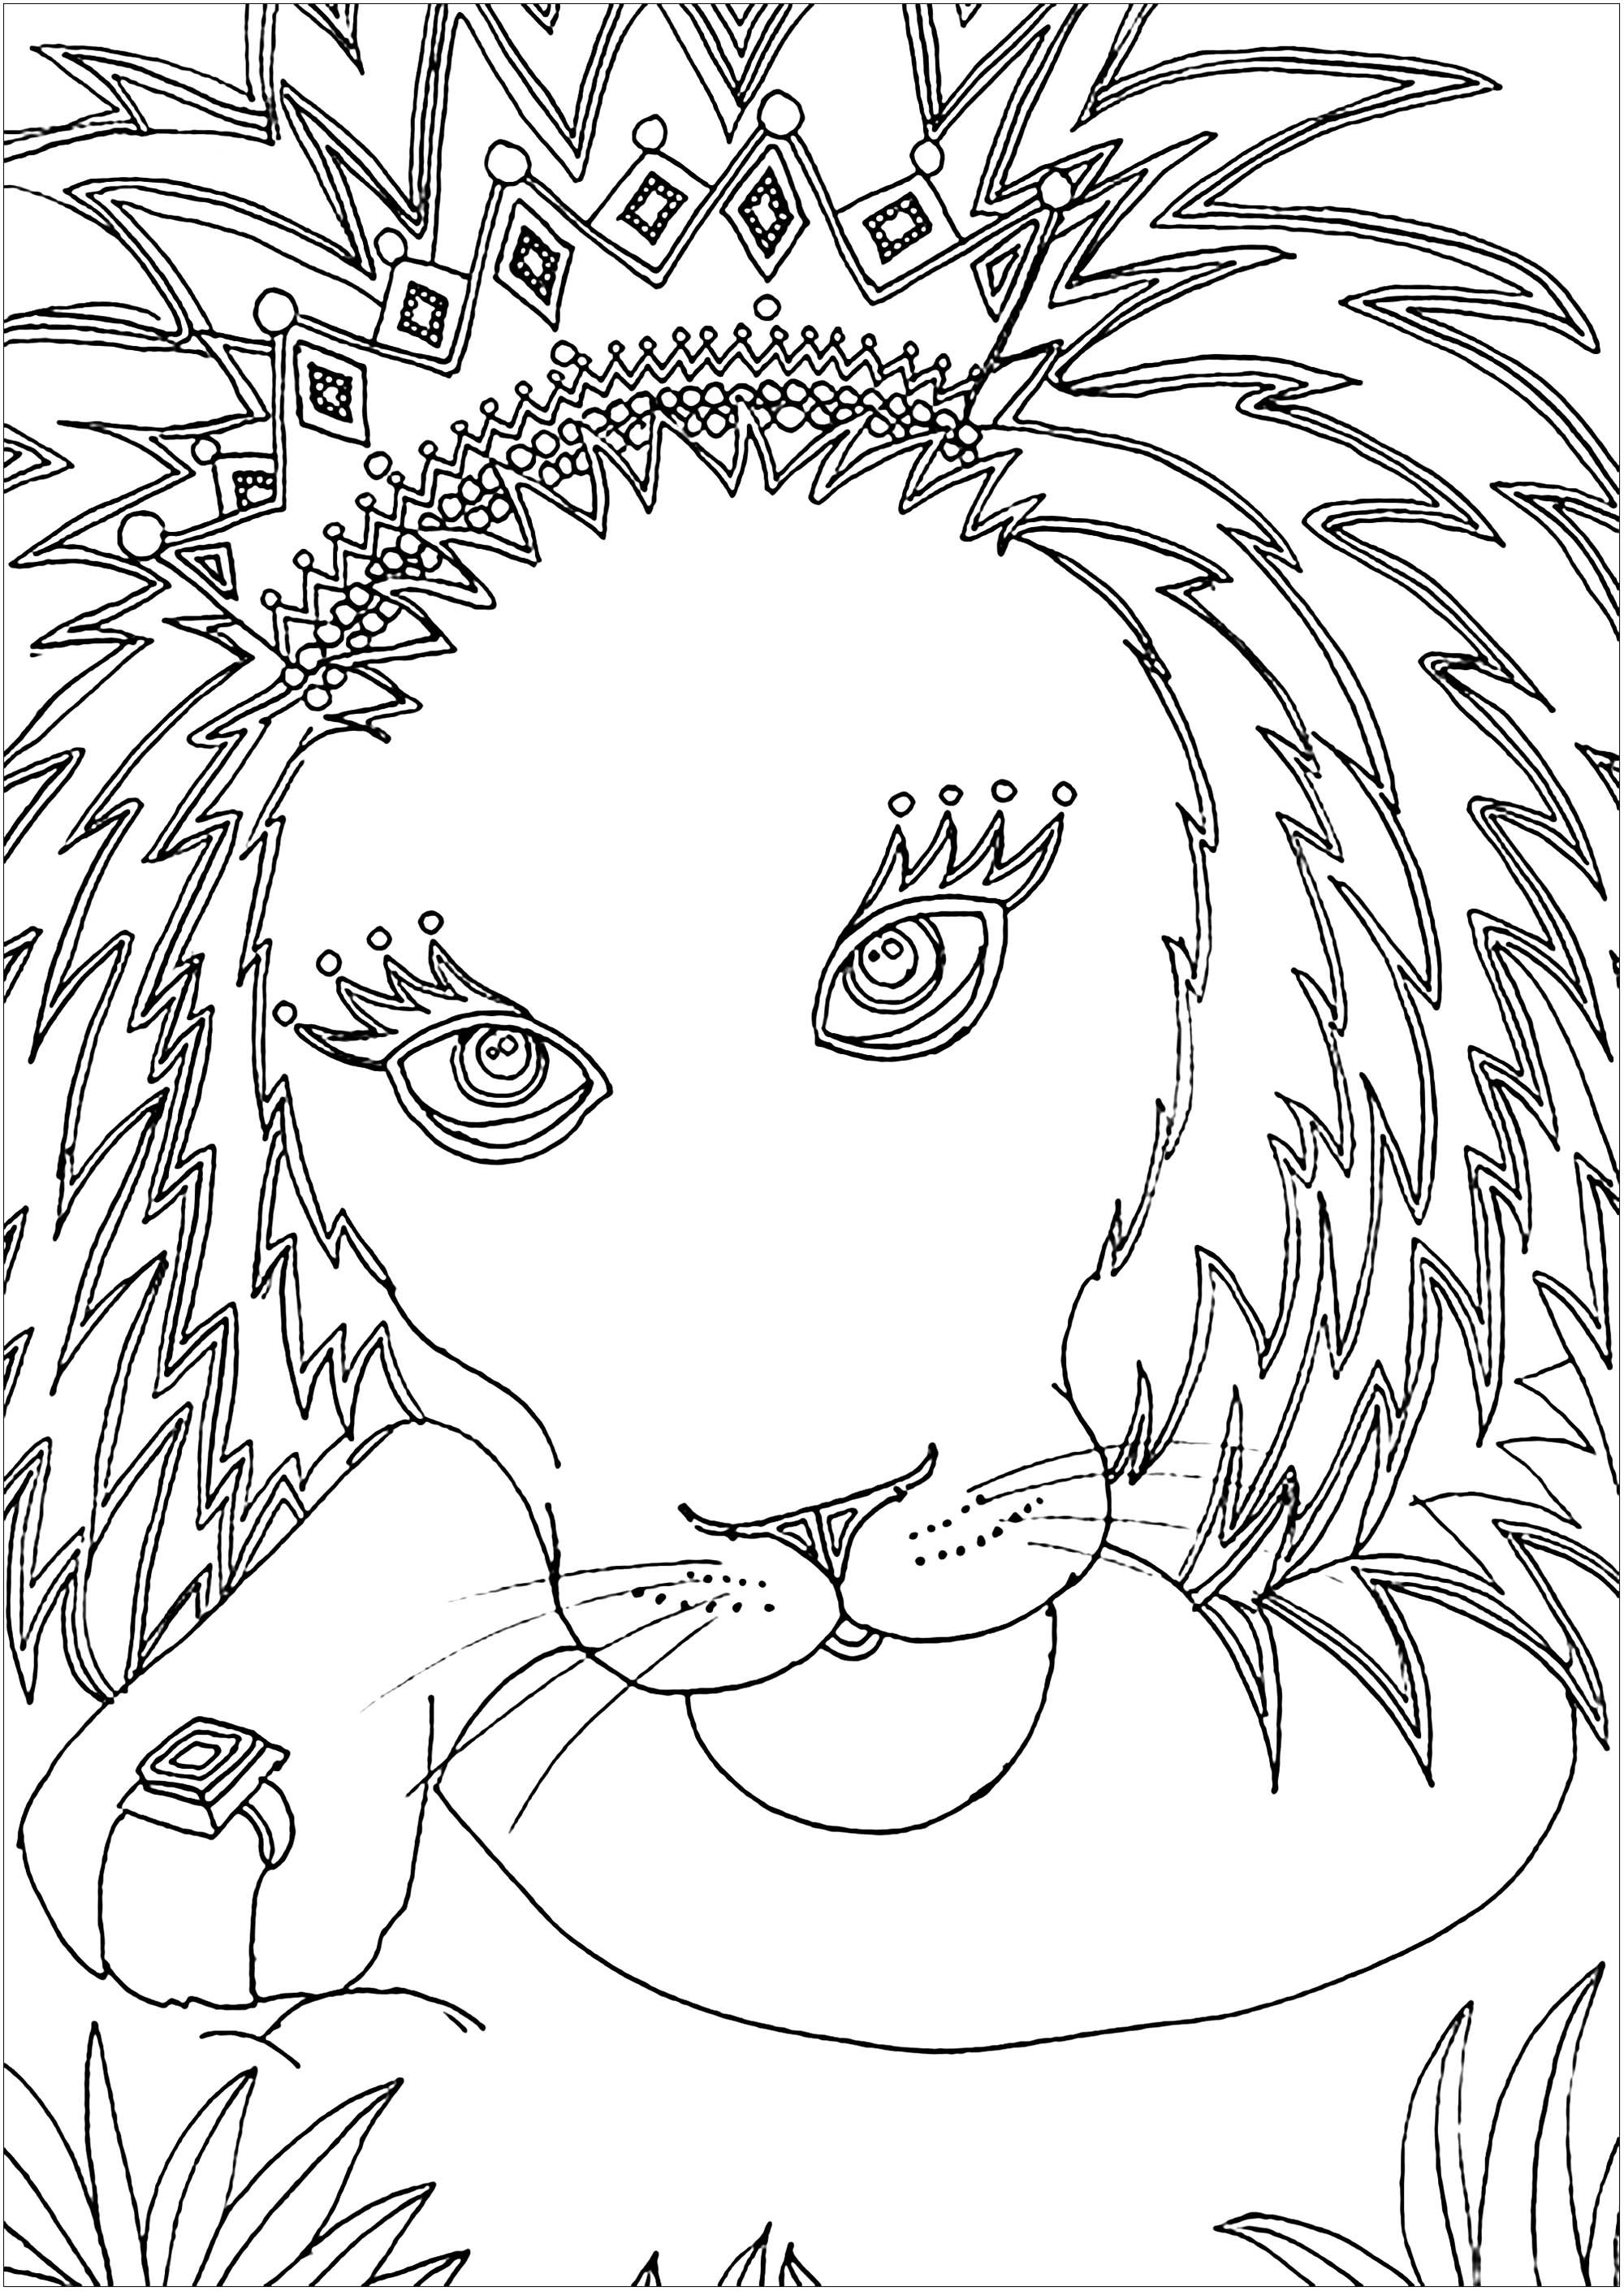 Lion with his crown, Artist : Kerozen